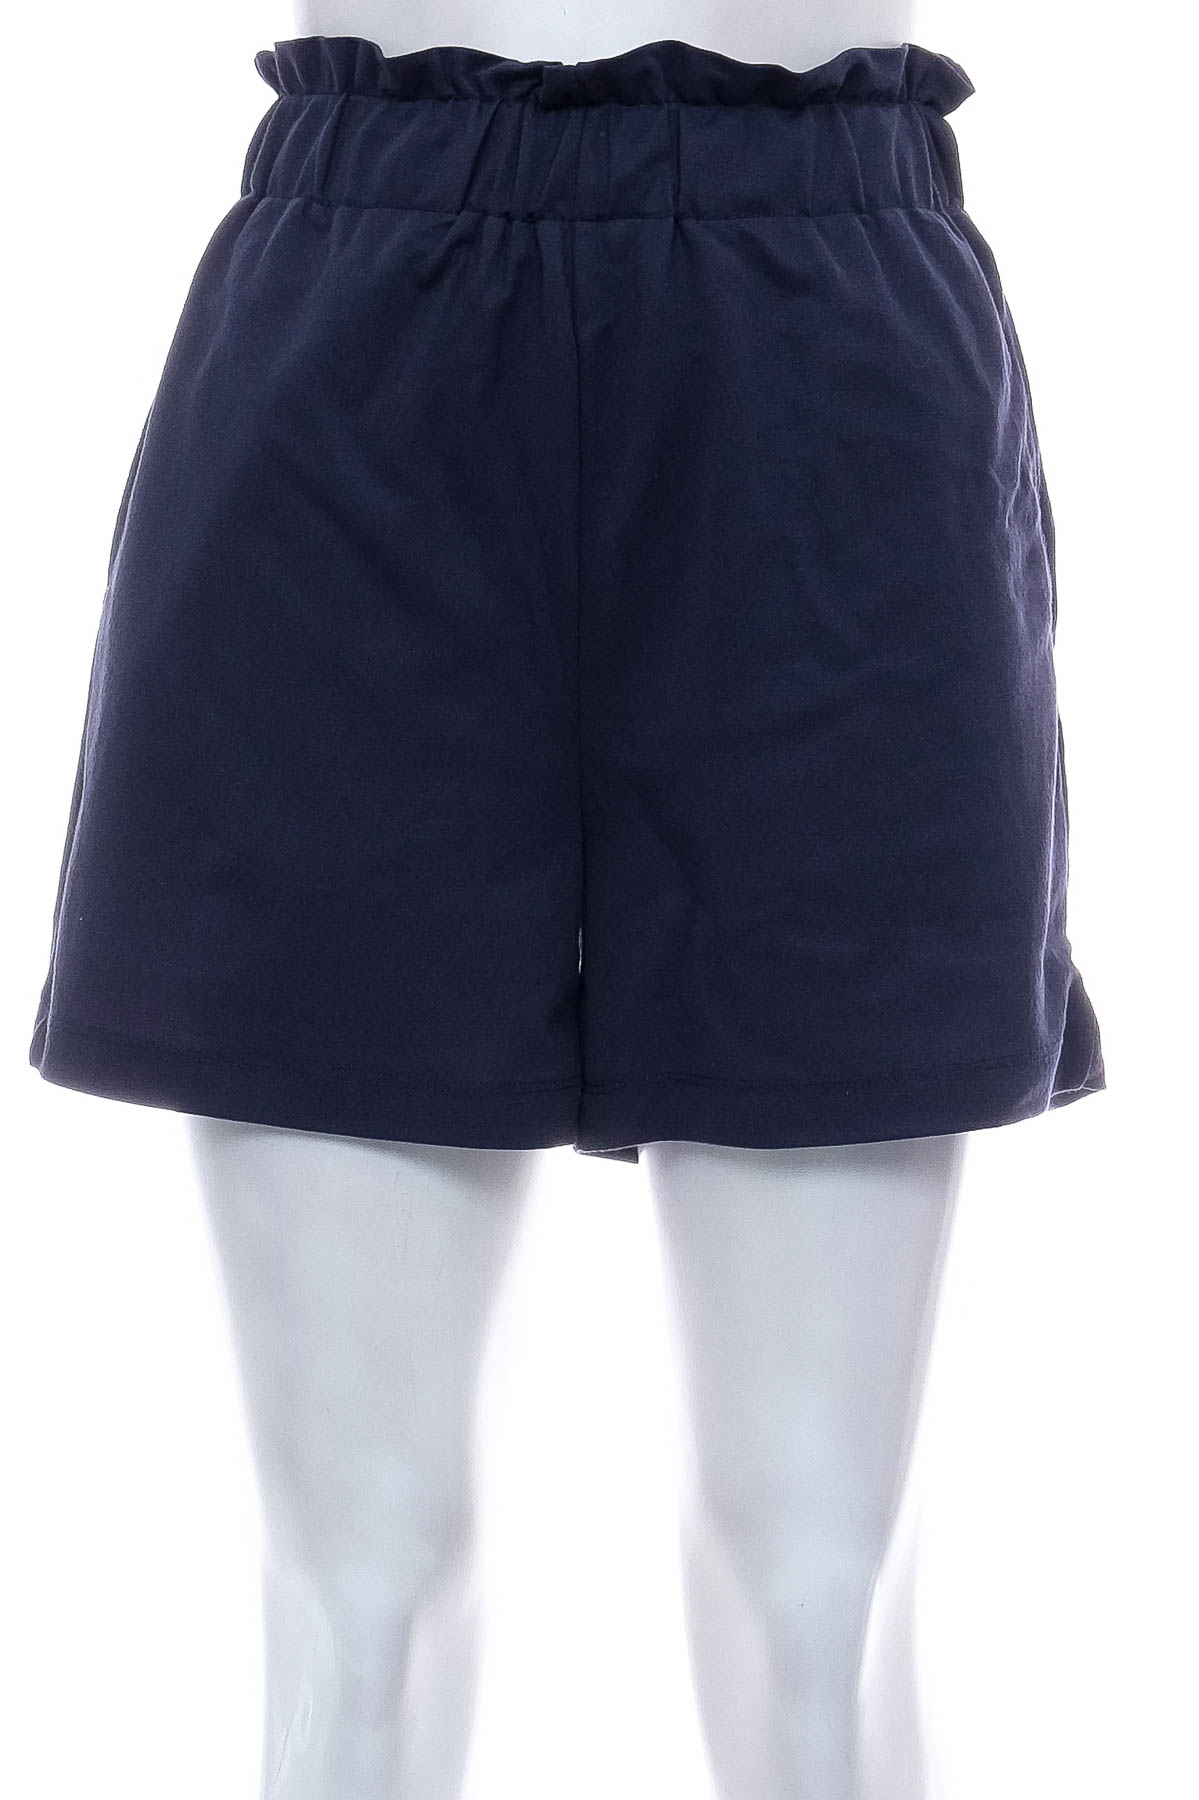 Female shorts - Anko - 0